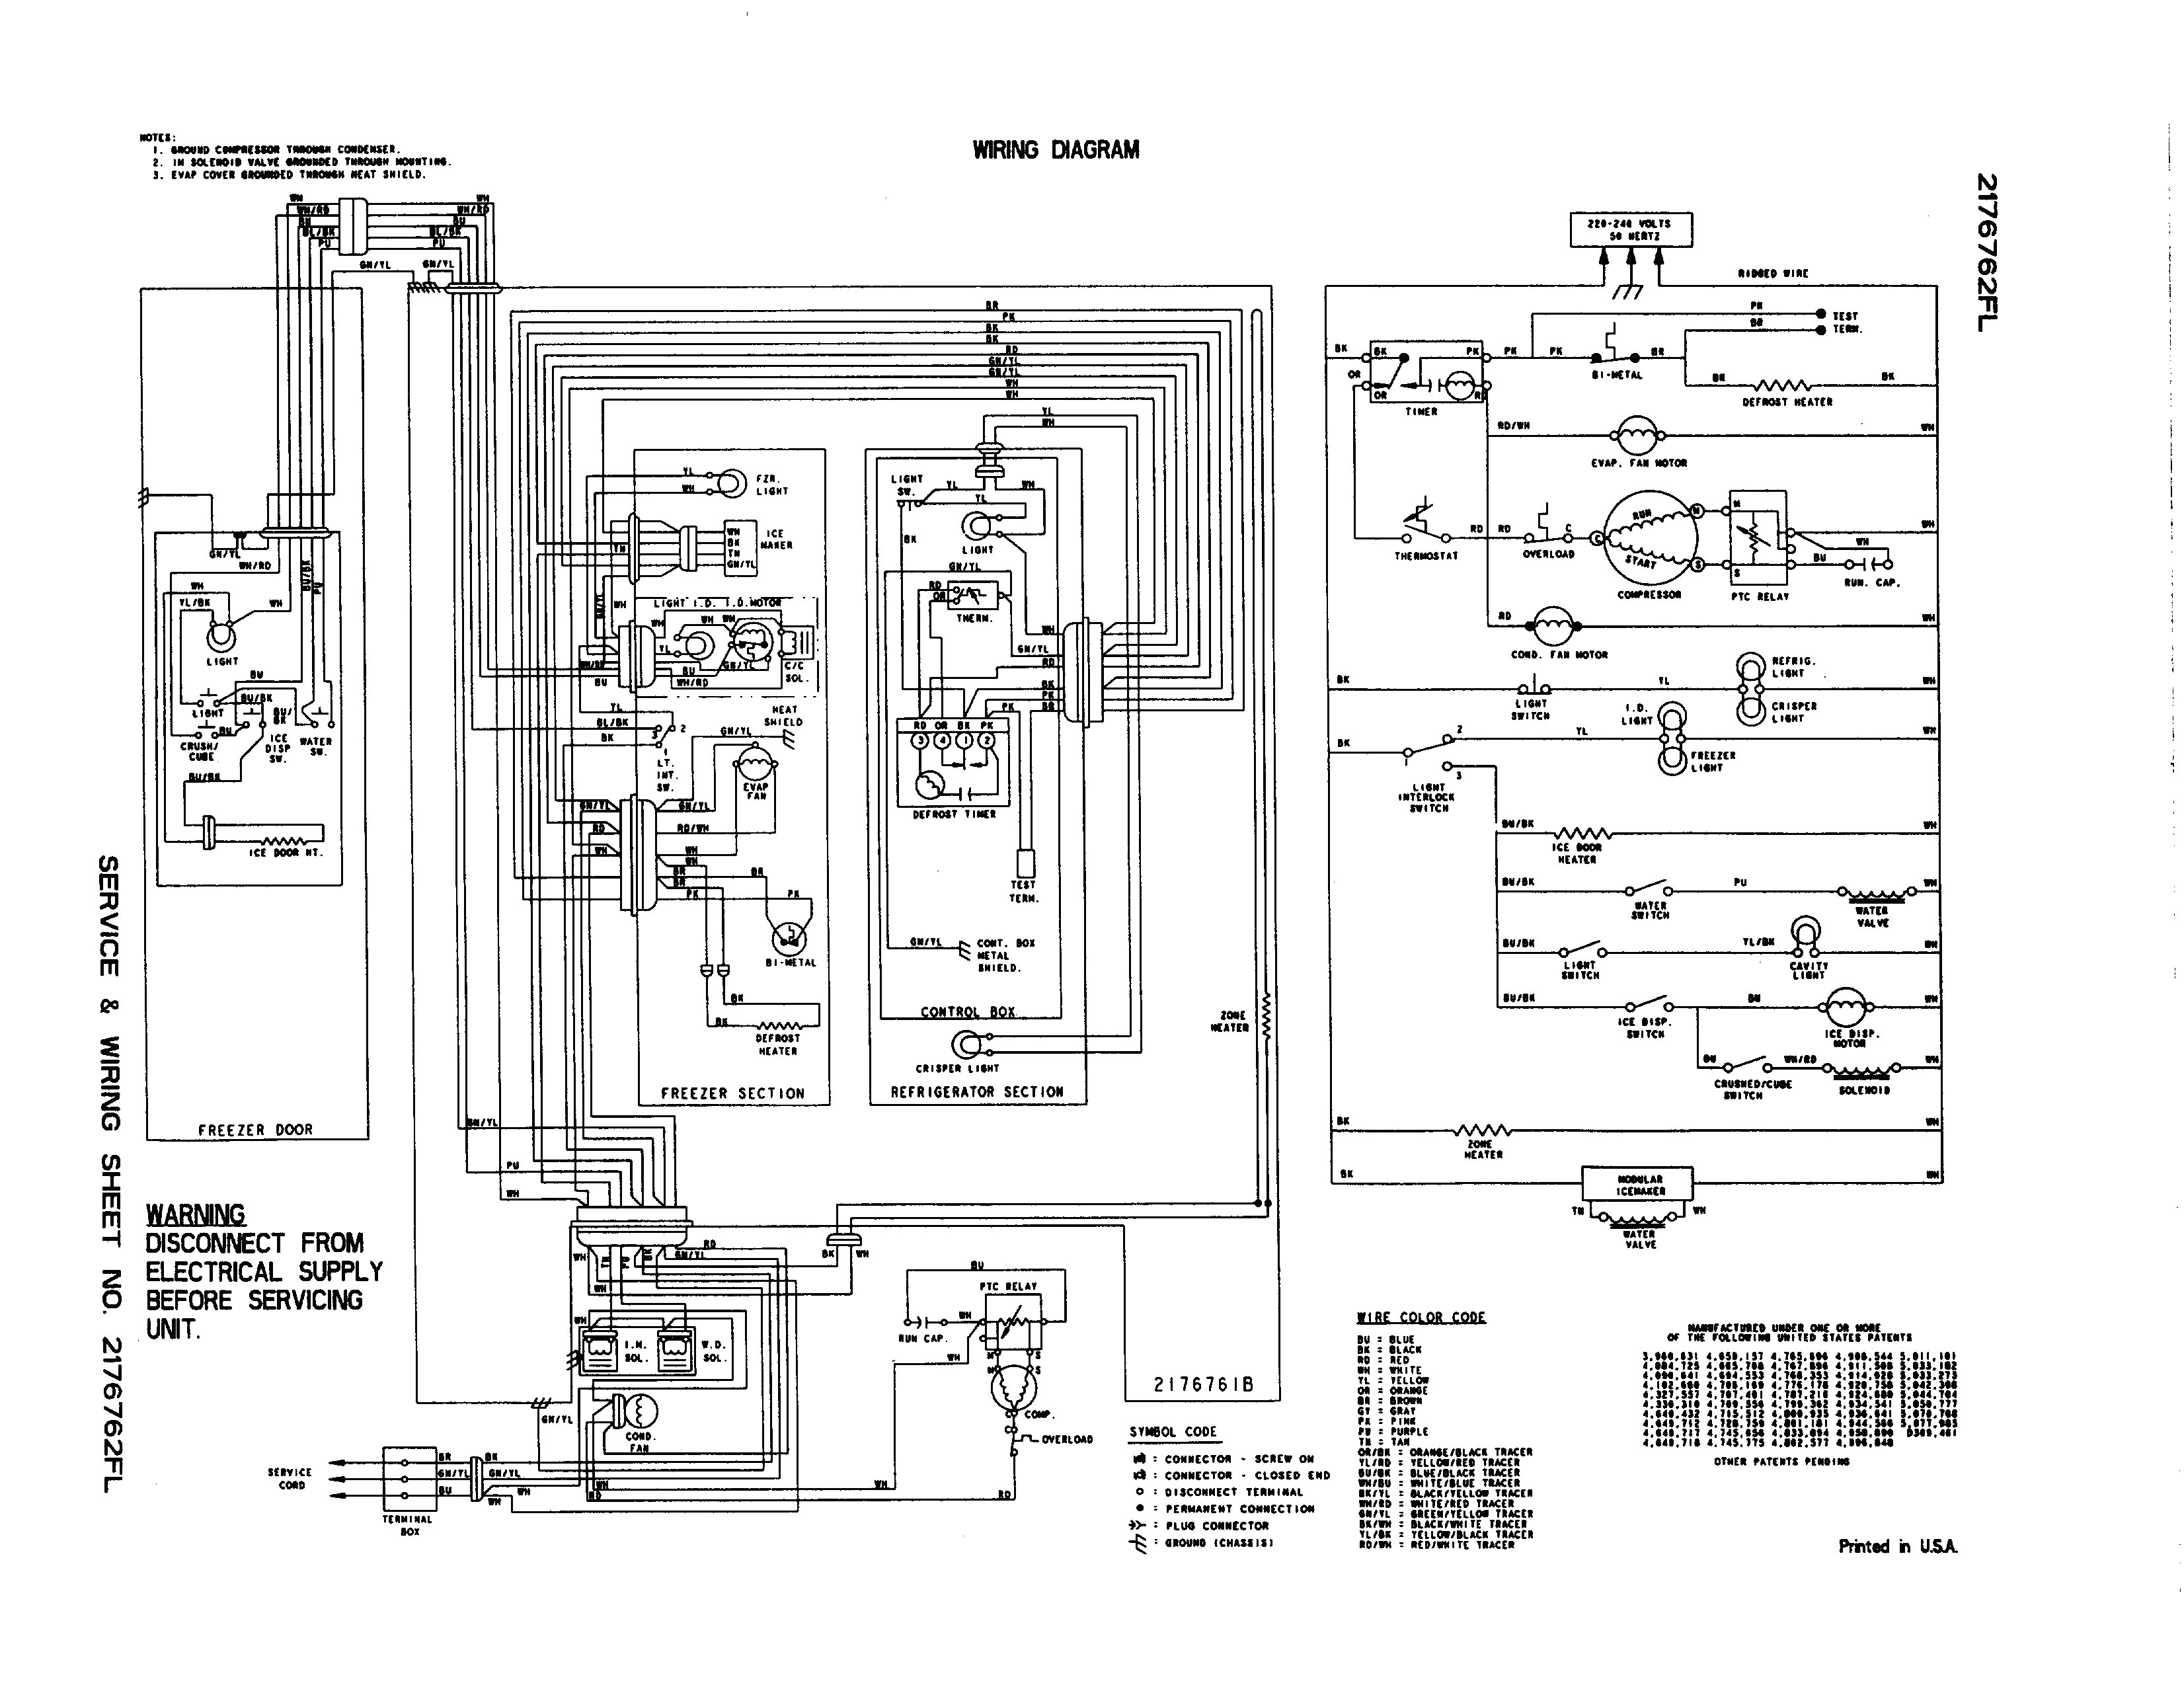 bmw s1000rr wiring diagram wiring diagram insidebmw s1000rr wiring diagram wiring diagram centre 2011 bmw s1000rr